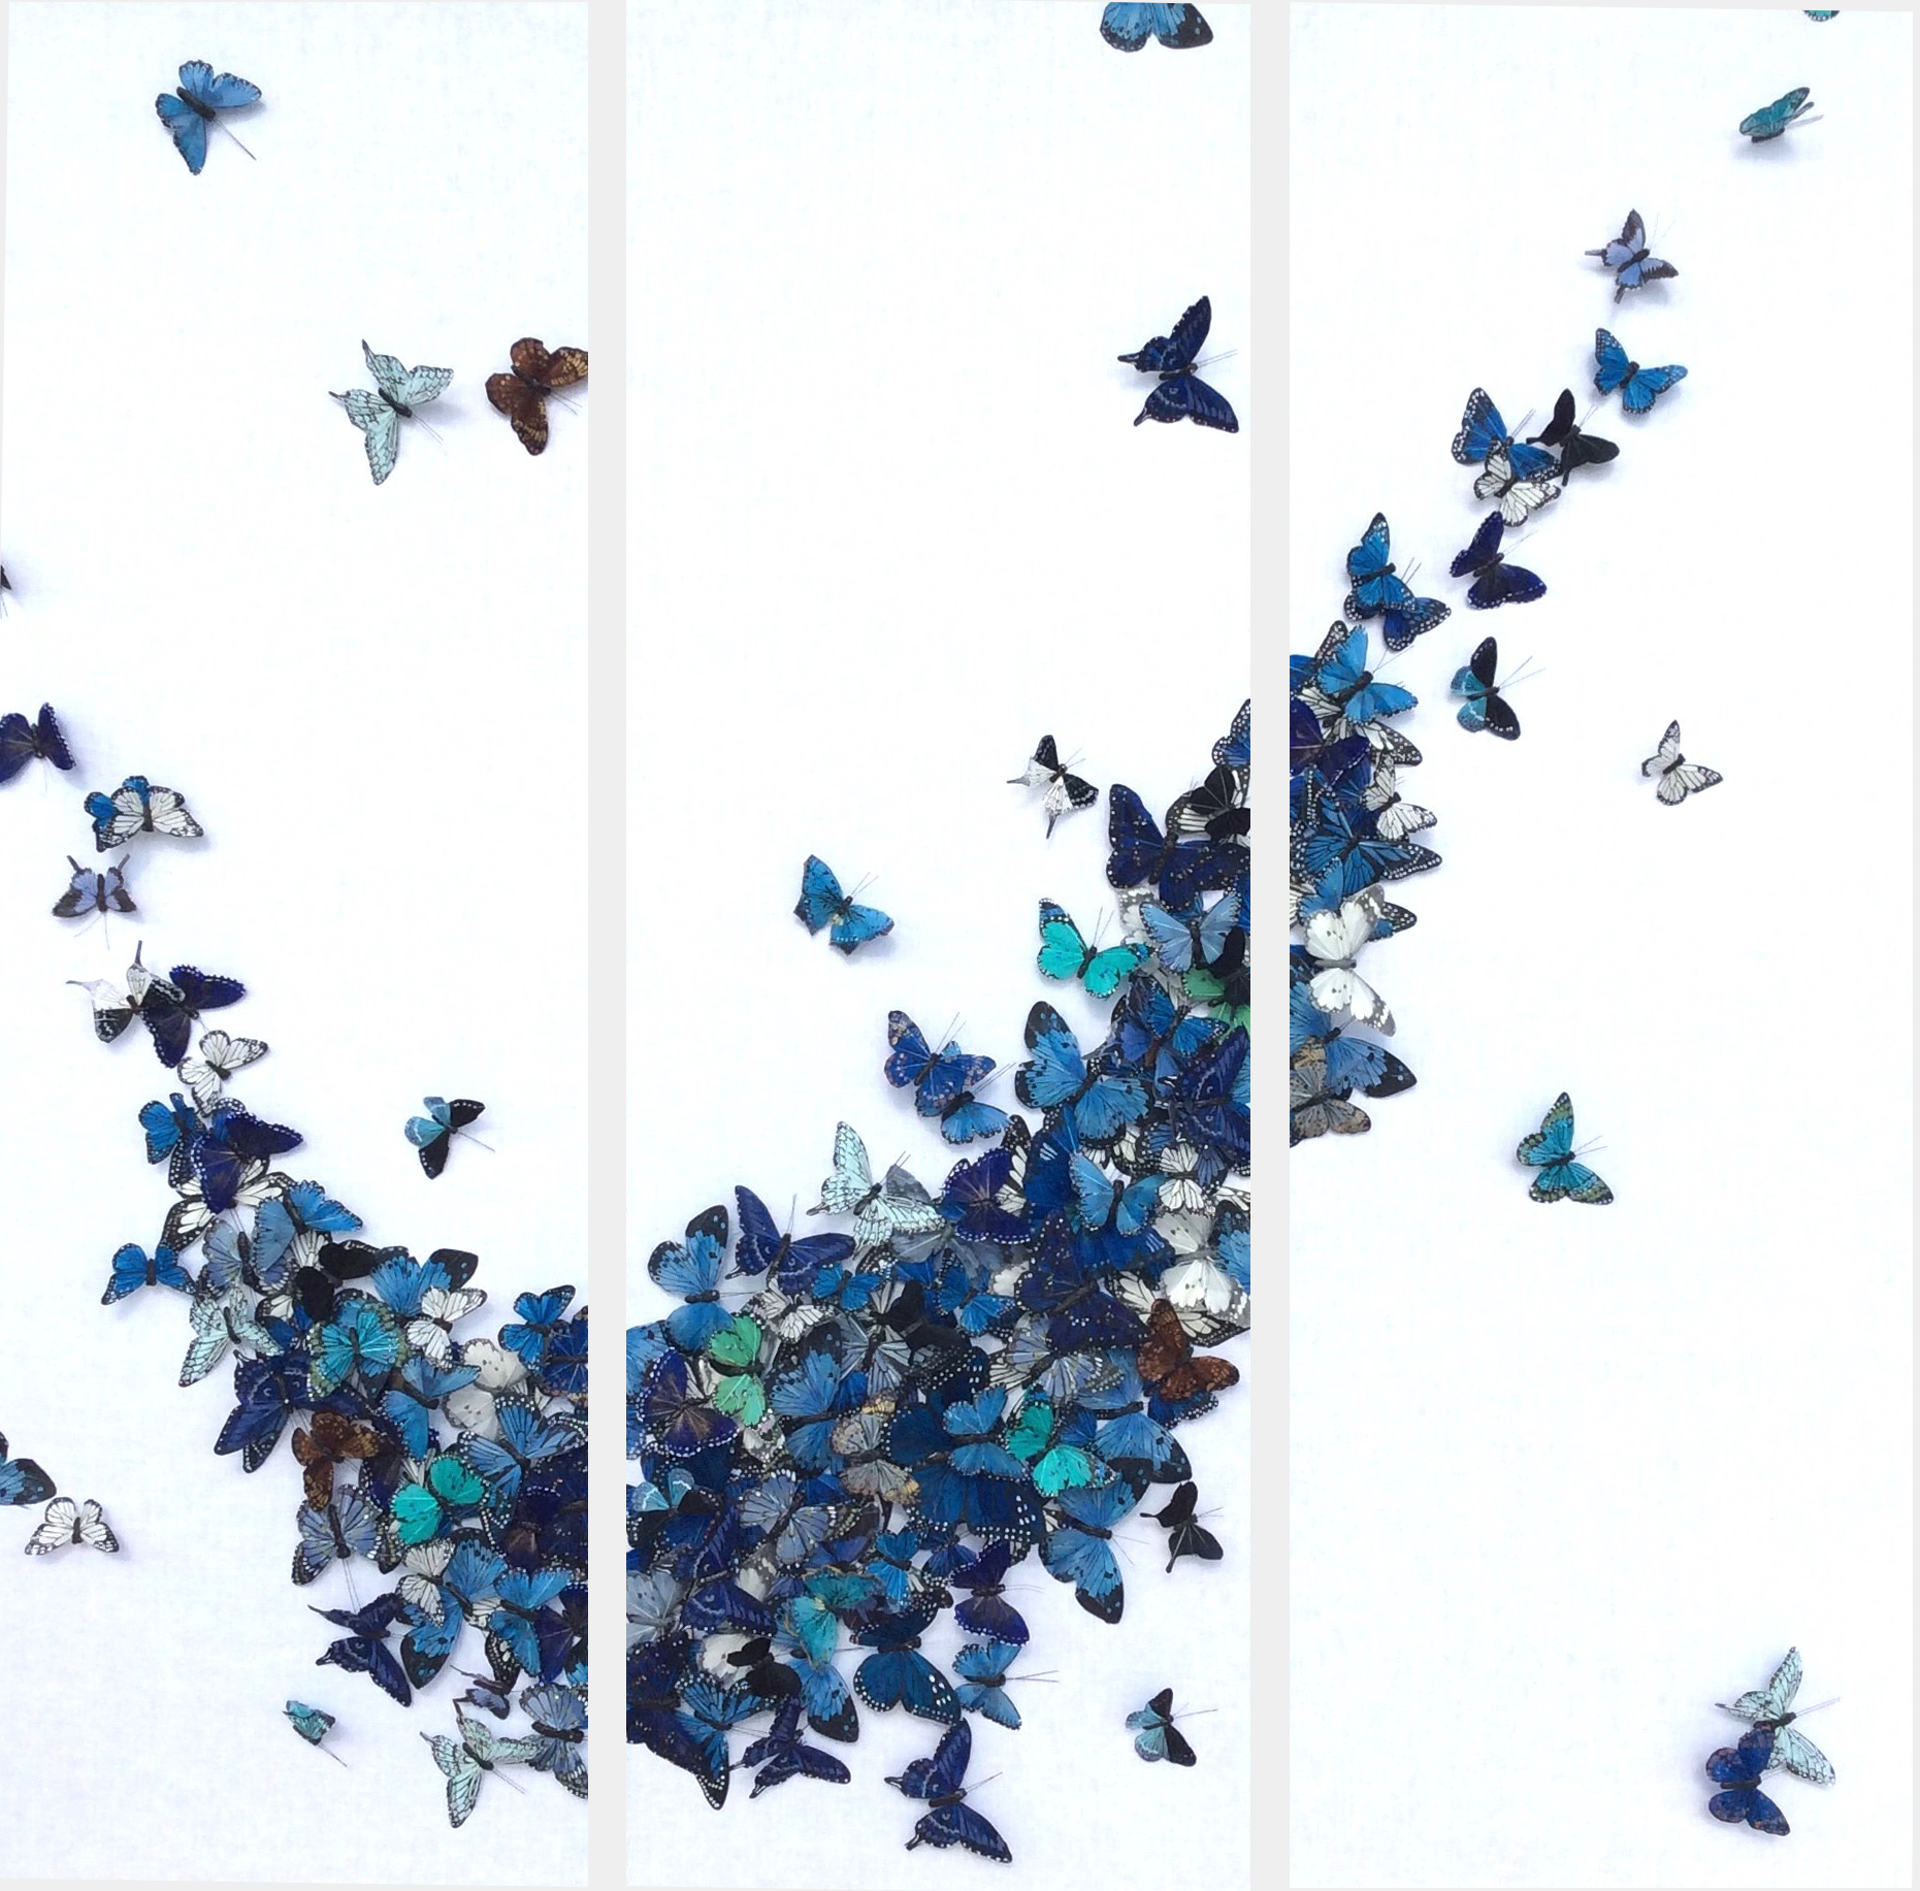 Splash (Triptych) by Juan Carlos Collada